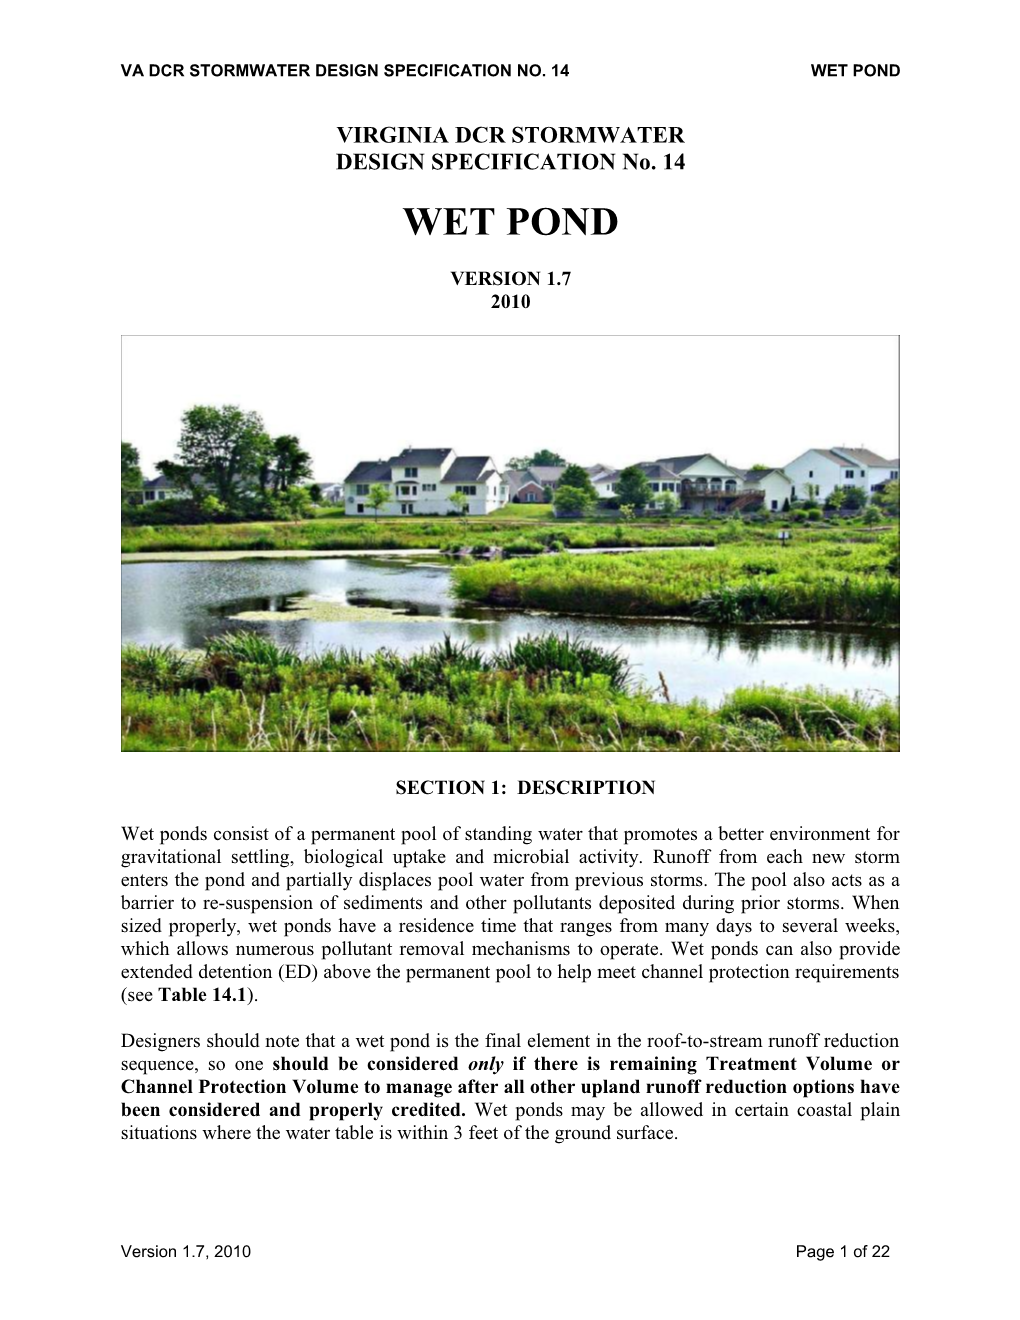 Va Dcr Stormwater Design Specification No. 14Wet Pond